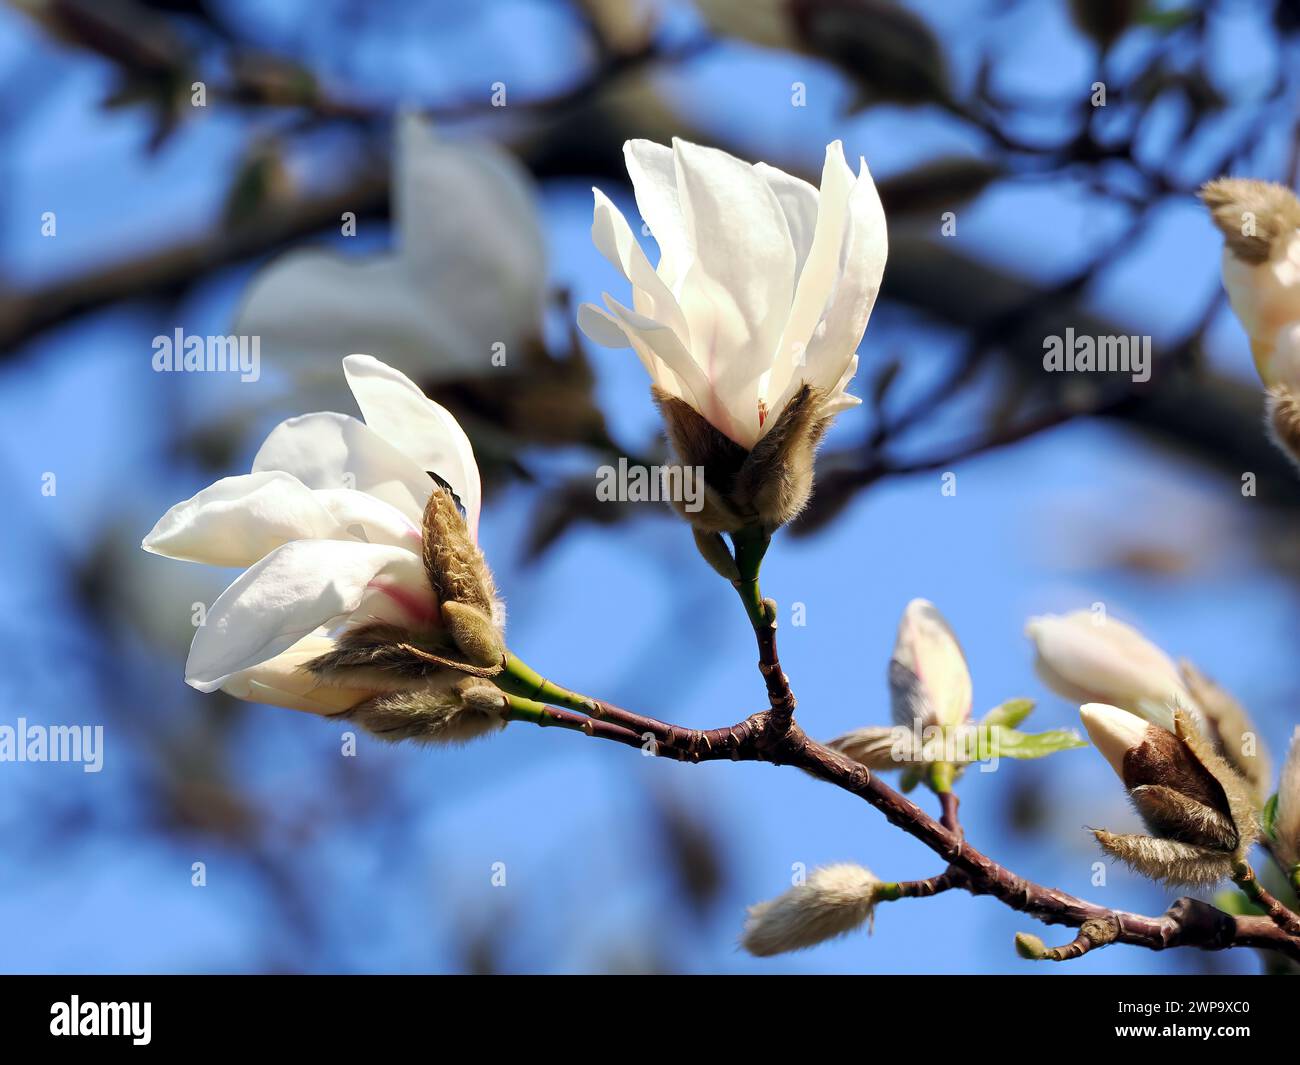 mokryeon, kobus magnolia, Kobushi-Magnolie, Magnolia de Kobé, Magnolia kobus, japán liliomfa, Kobushi-Magnolie, Hungary, Magyarország, Europe Stock Photo